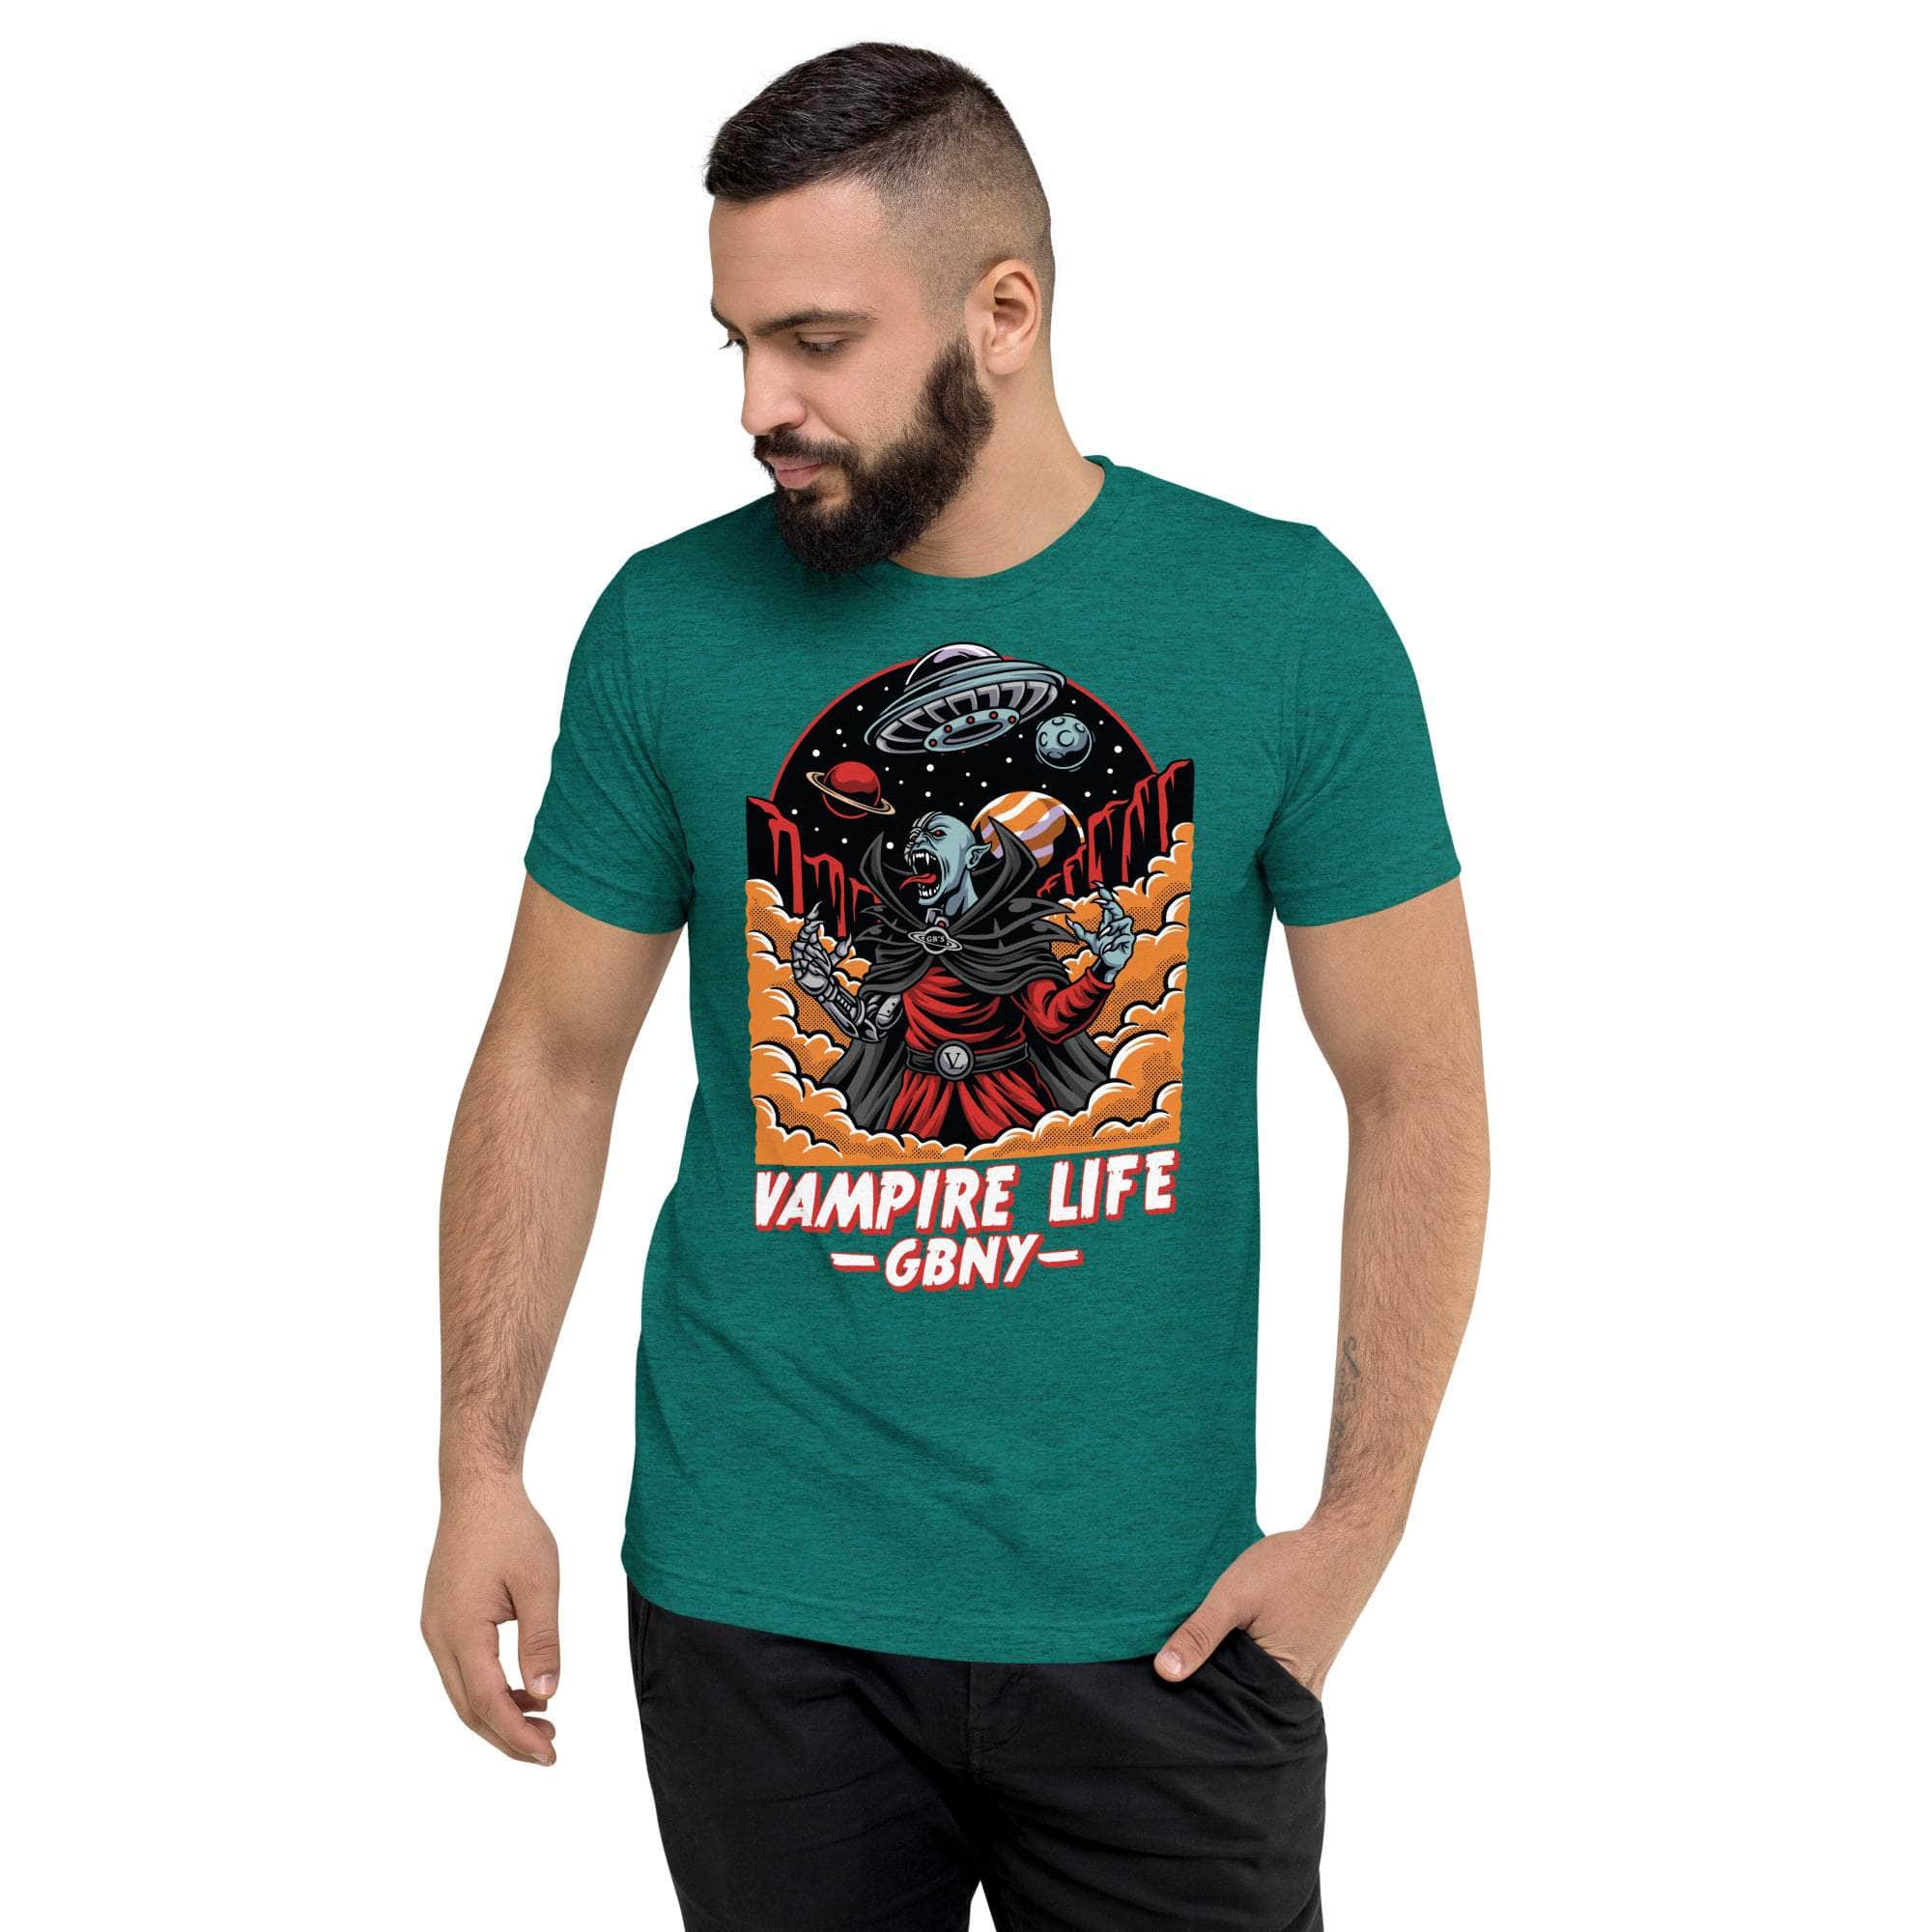 GBNY Teal Triblend / XS Vamp Life X GBNY "Space Vampire" T-shirt - Men's 3872353_6592